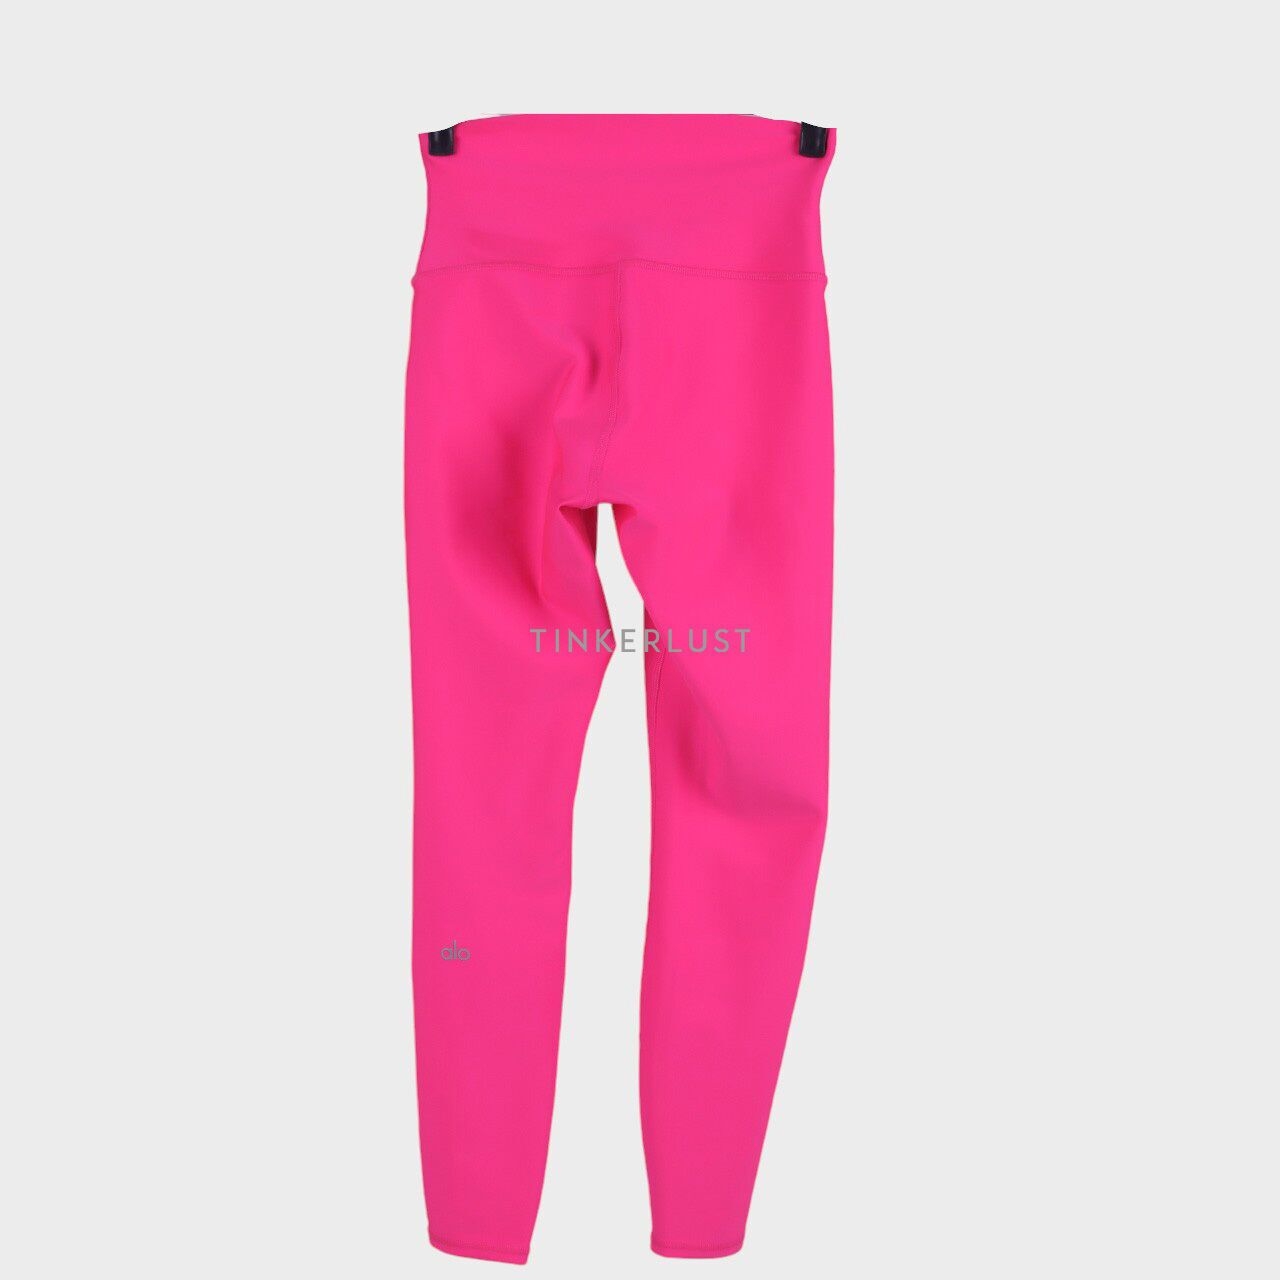 Alo Yoga Pink Legging Pants